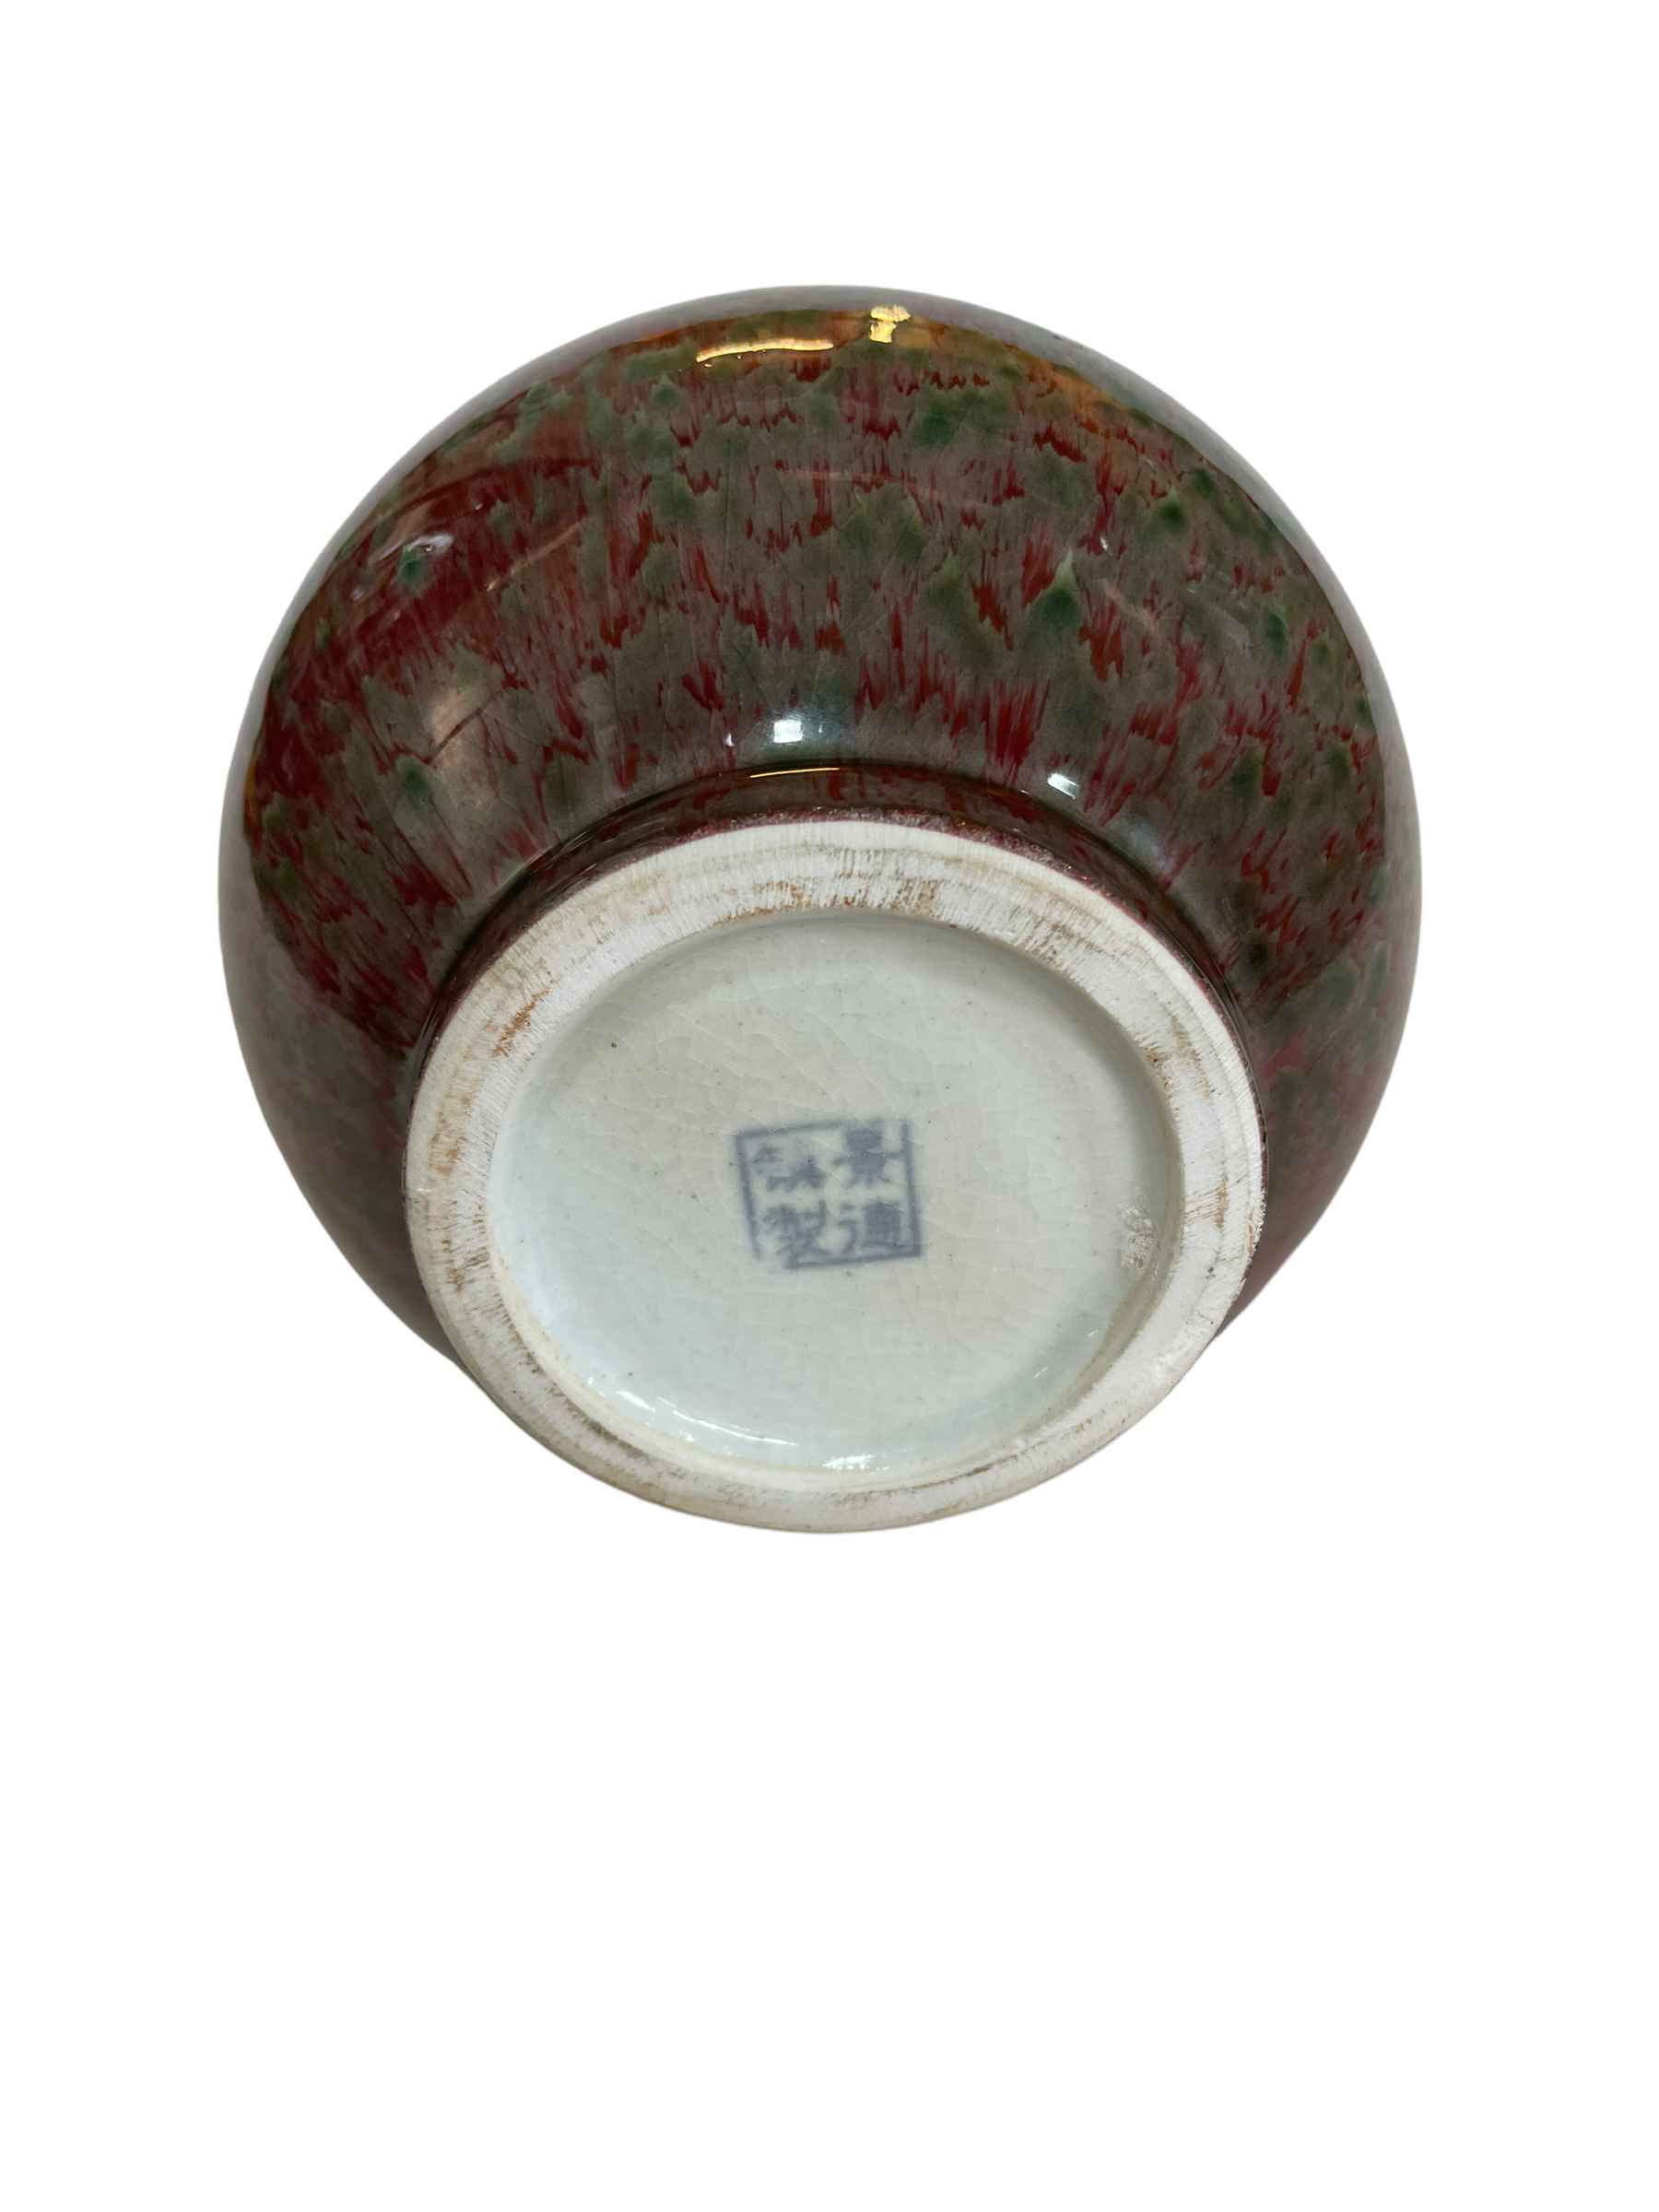 Chinese Jingdezhen streak glazed vase, 31cm. - Image 2 of 2